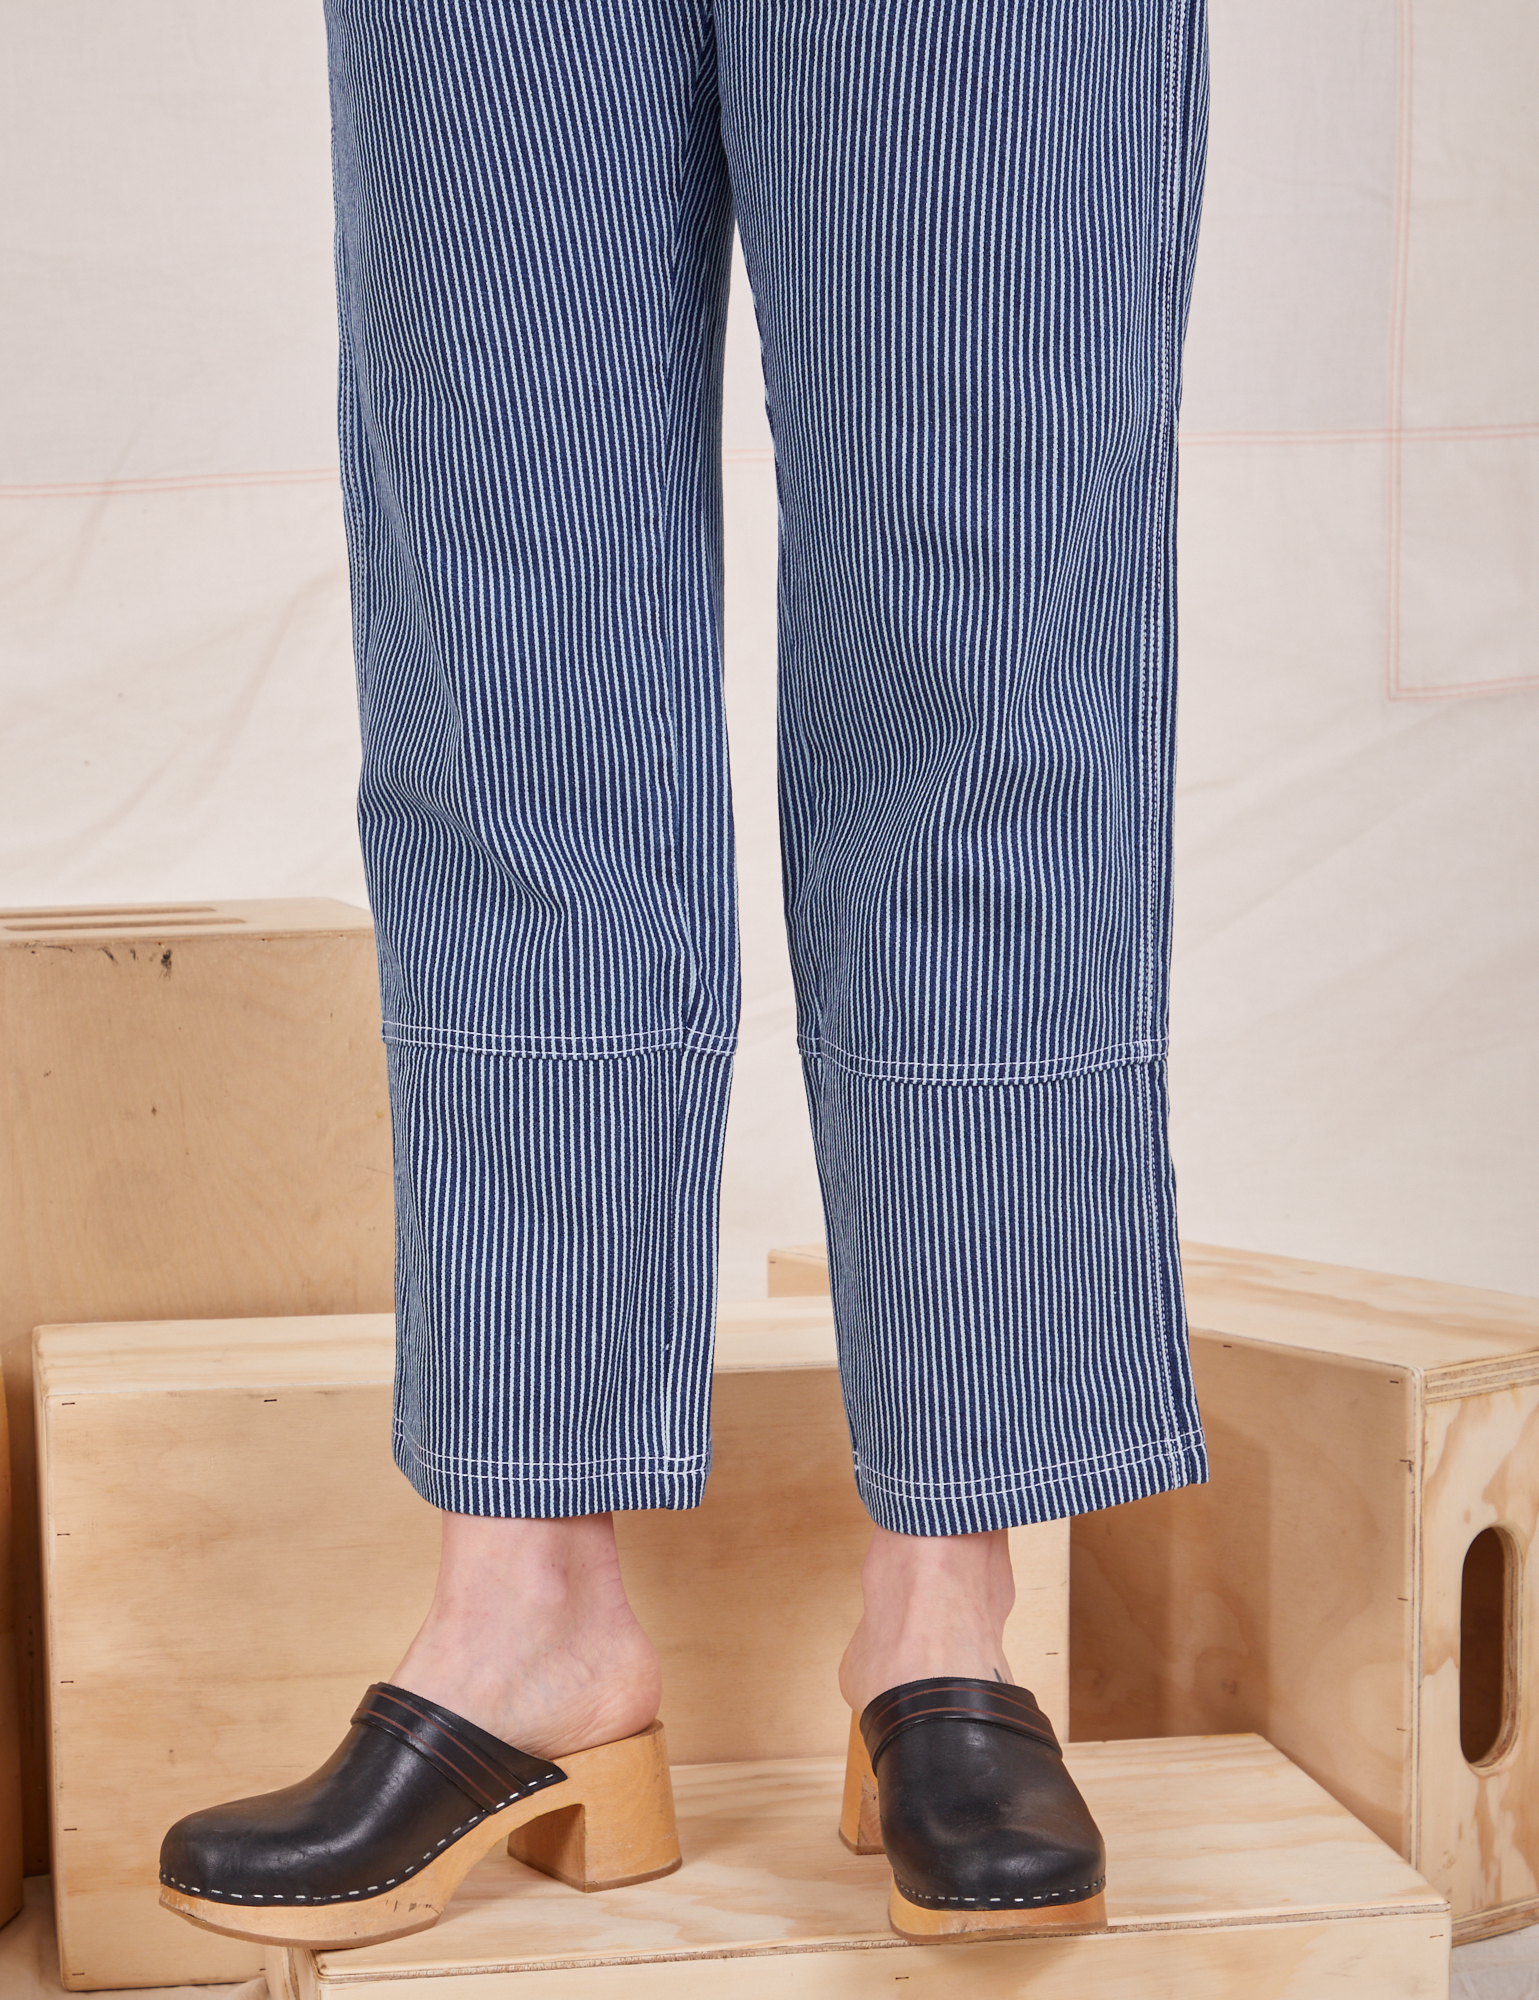 Carpenter Jeans in Railroad Stripes pant leg close up on Allison